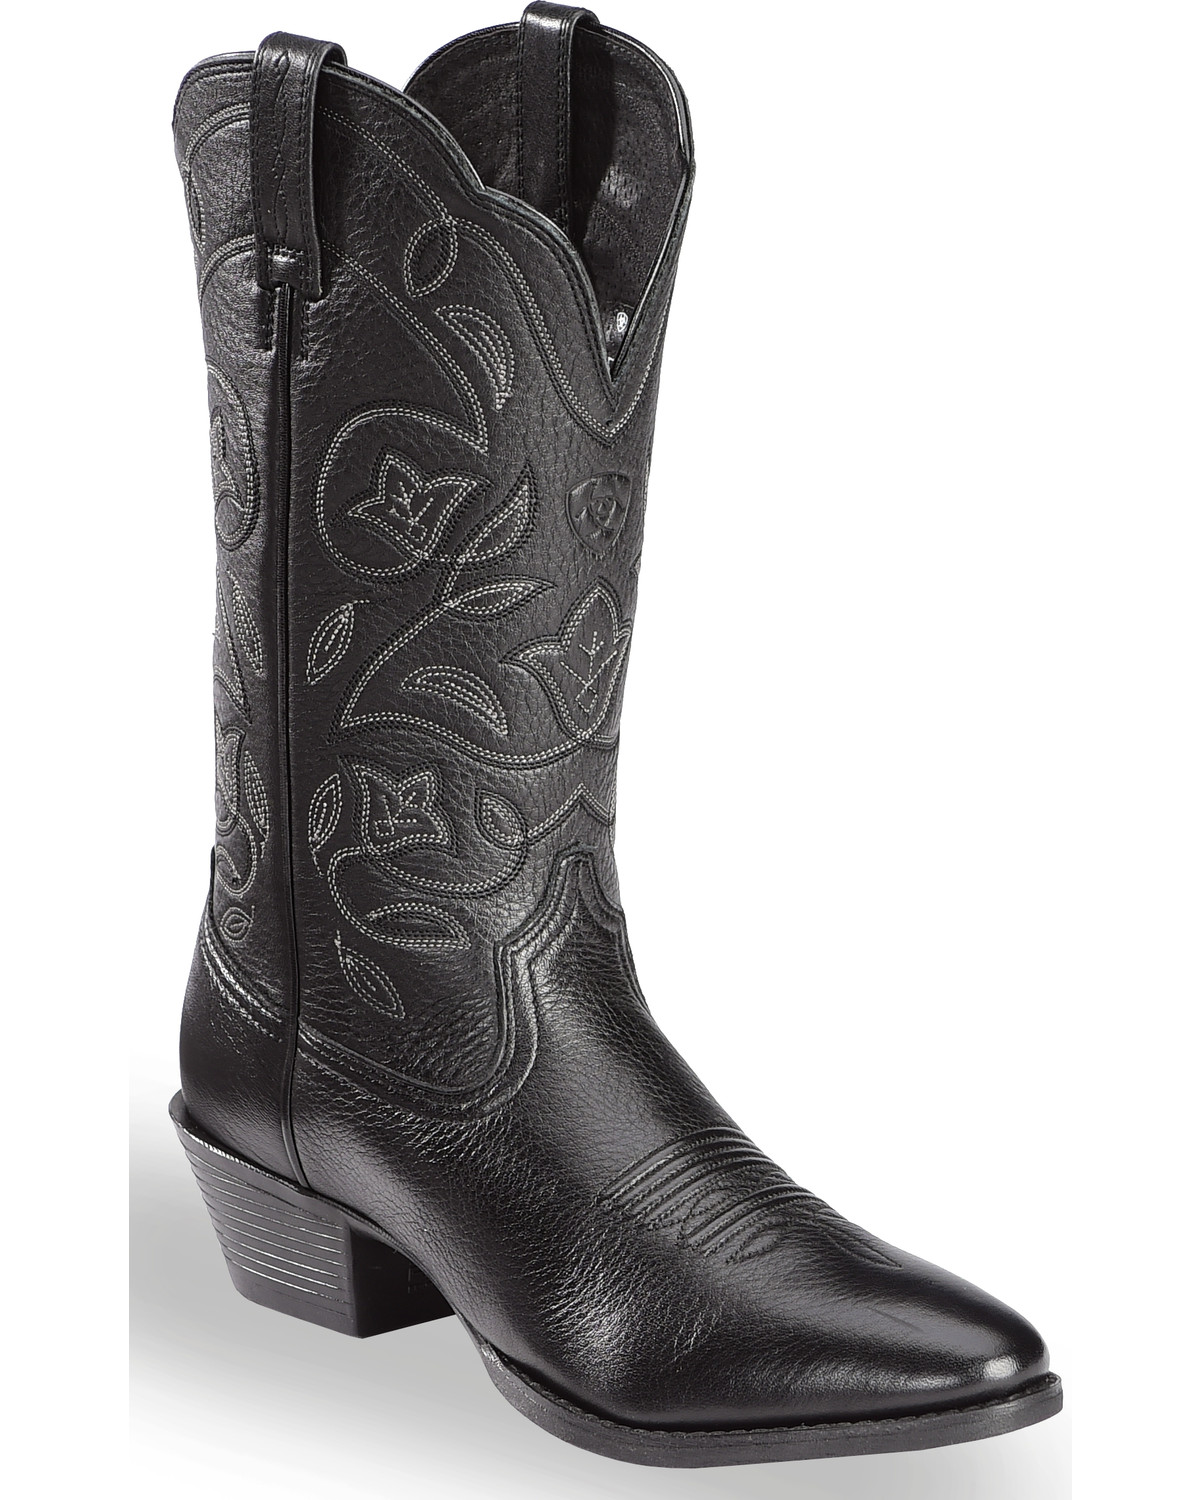 Ariat Women's 8" Deertan Western Boots - Round Toe